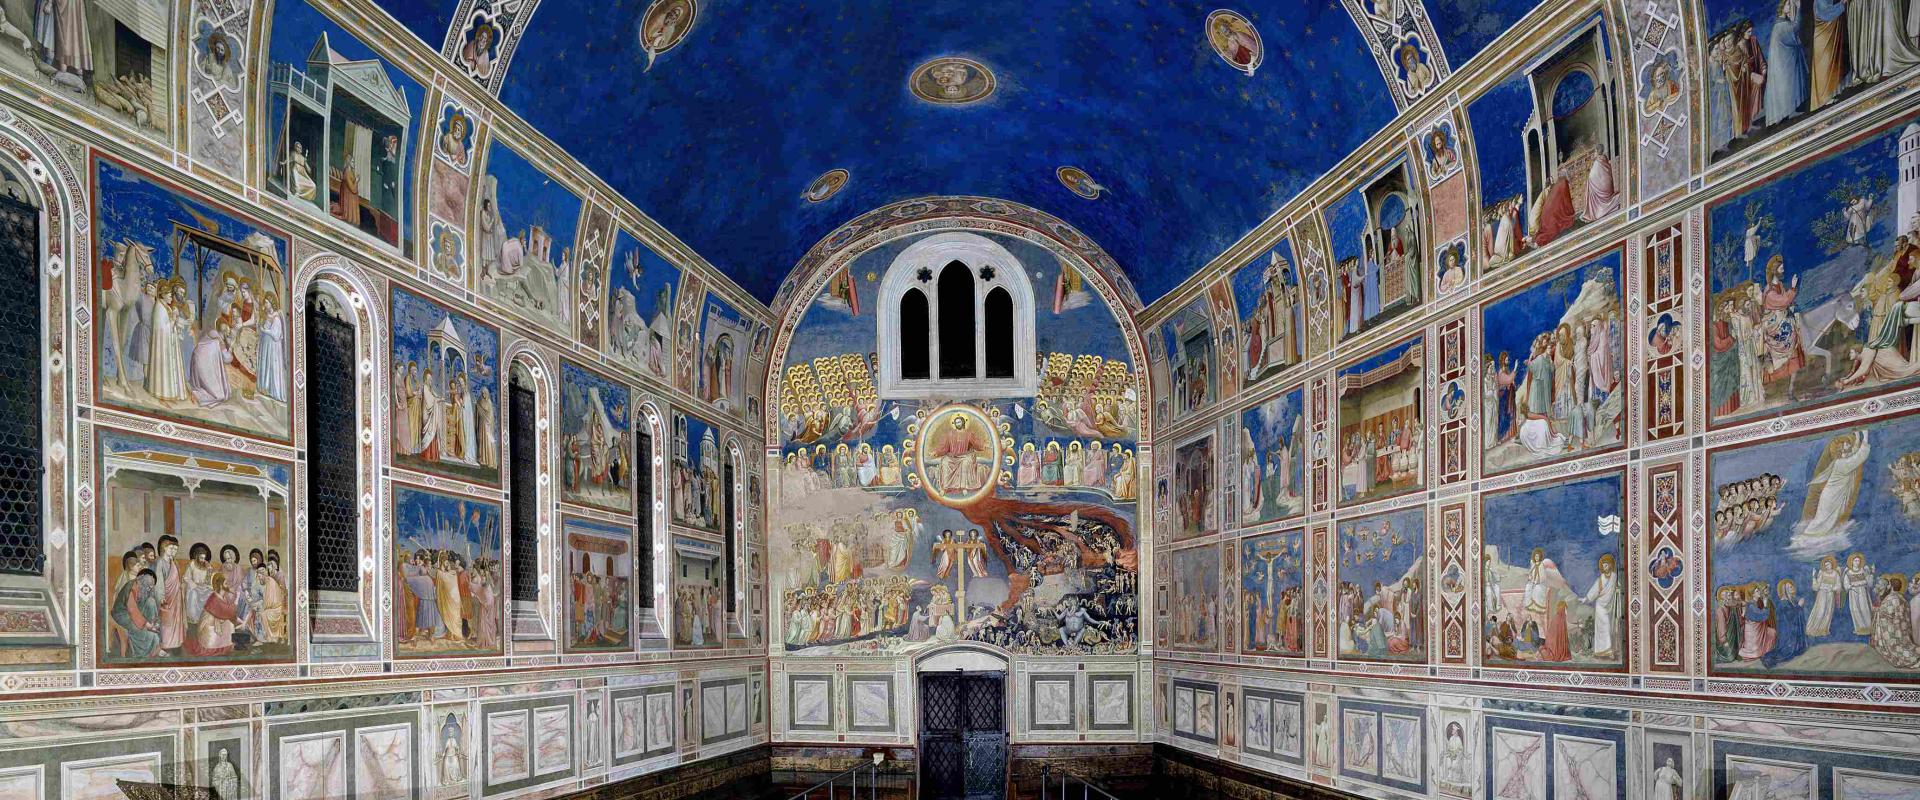 Padua - Scrovegni Chapel 